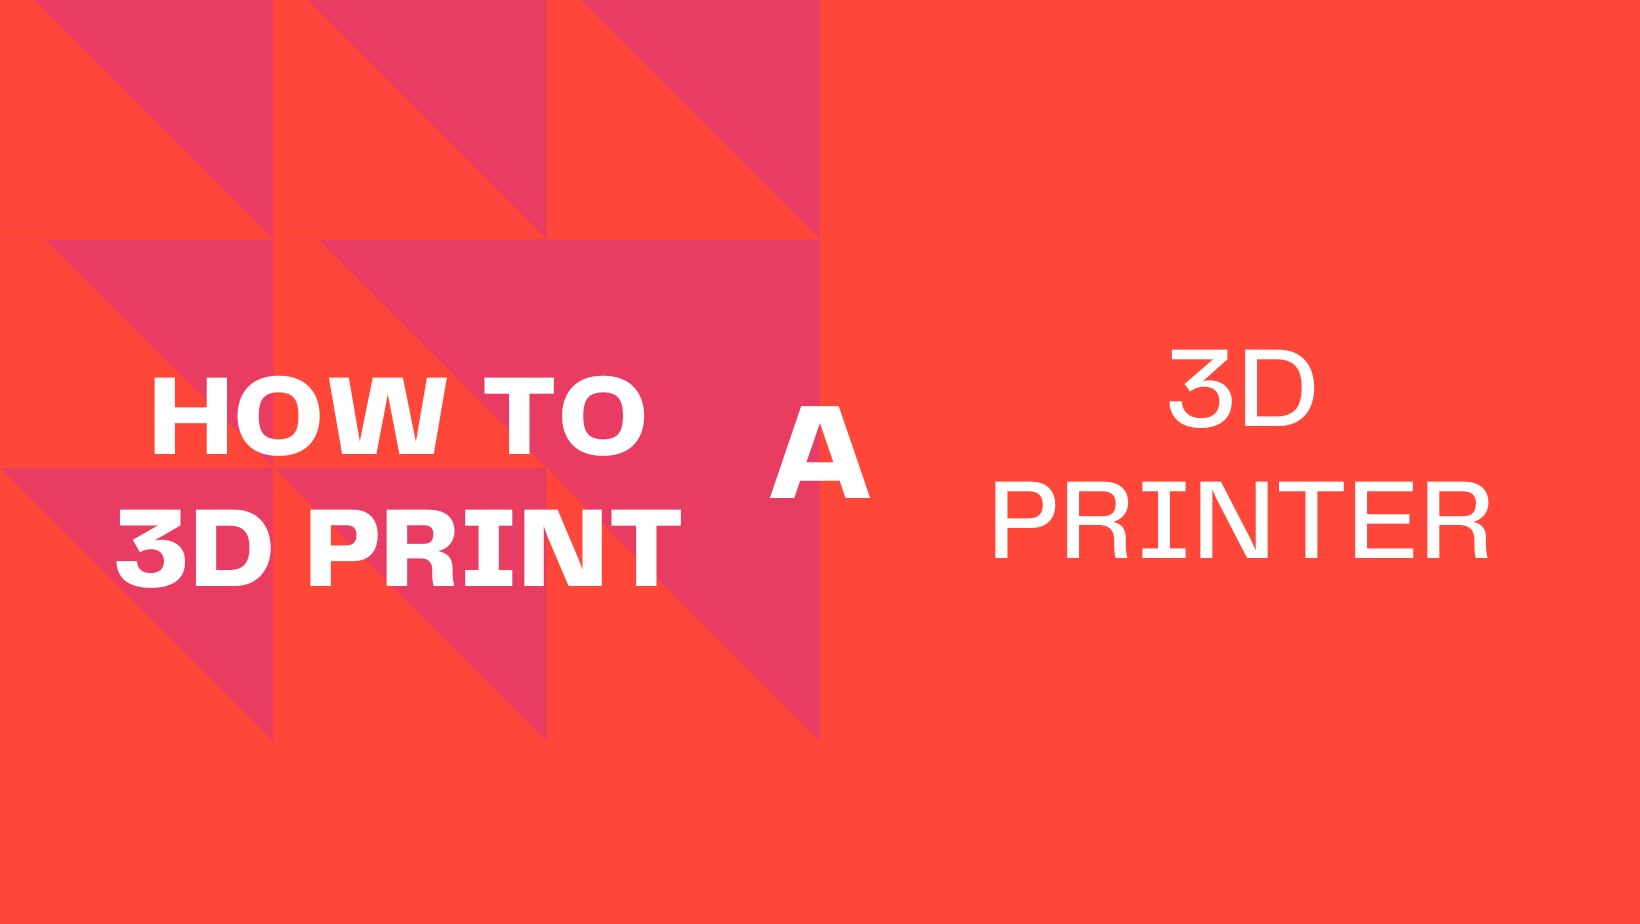 How To 3D Print A 3D Printer